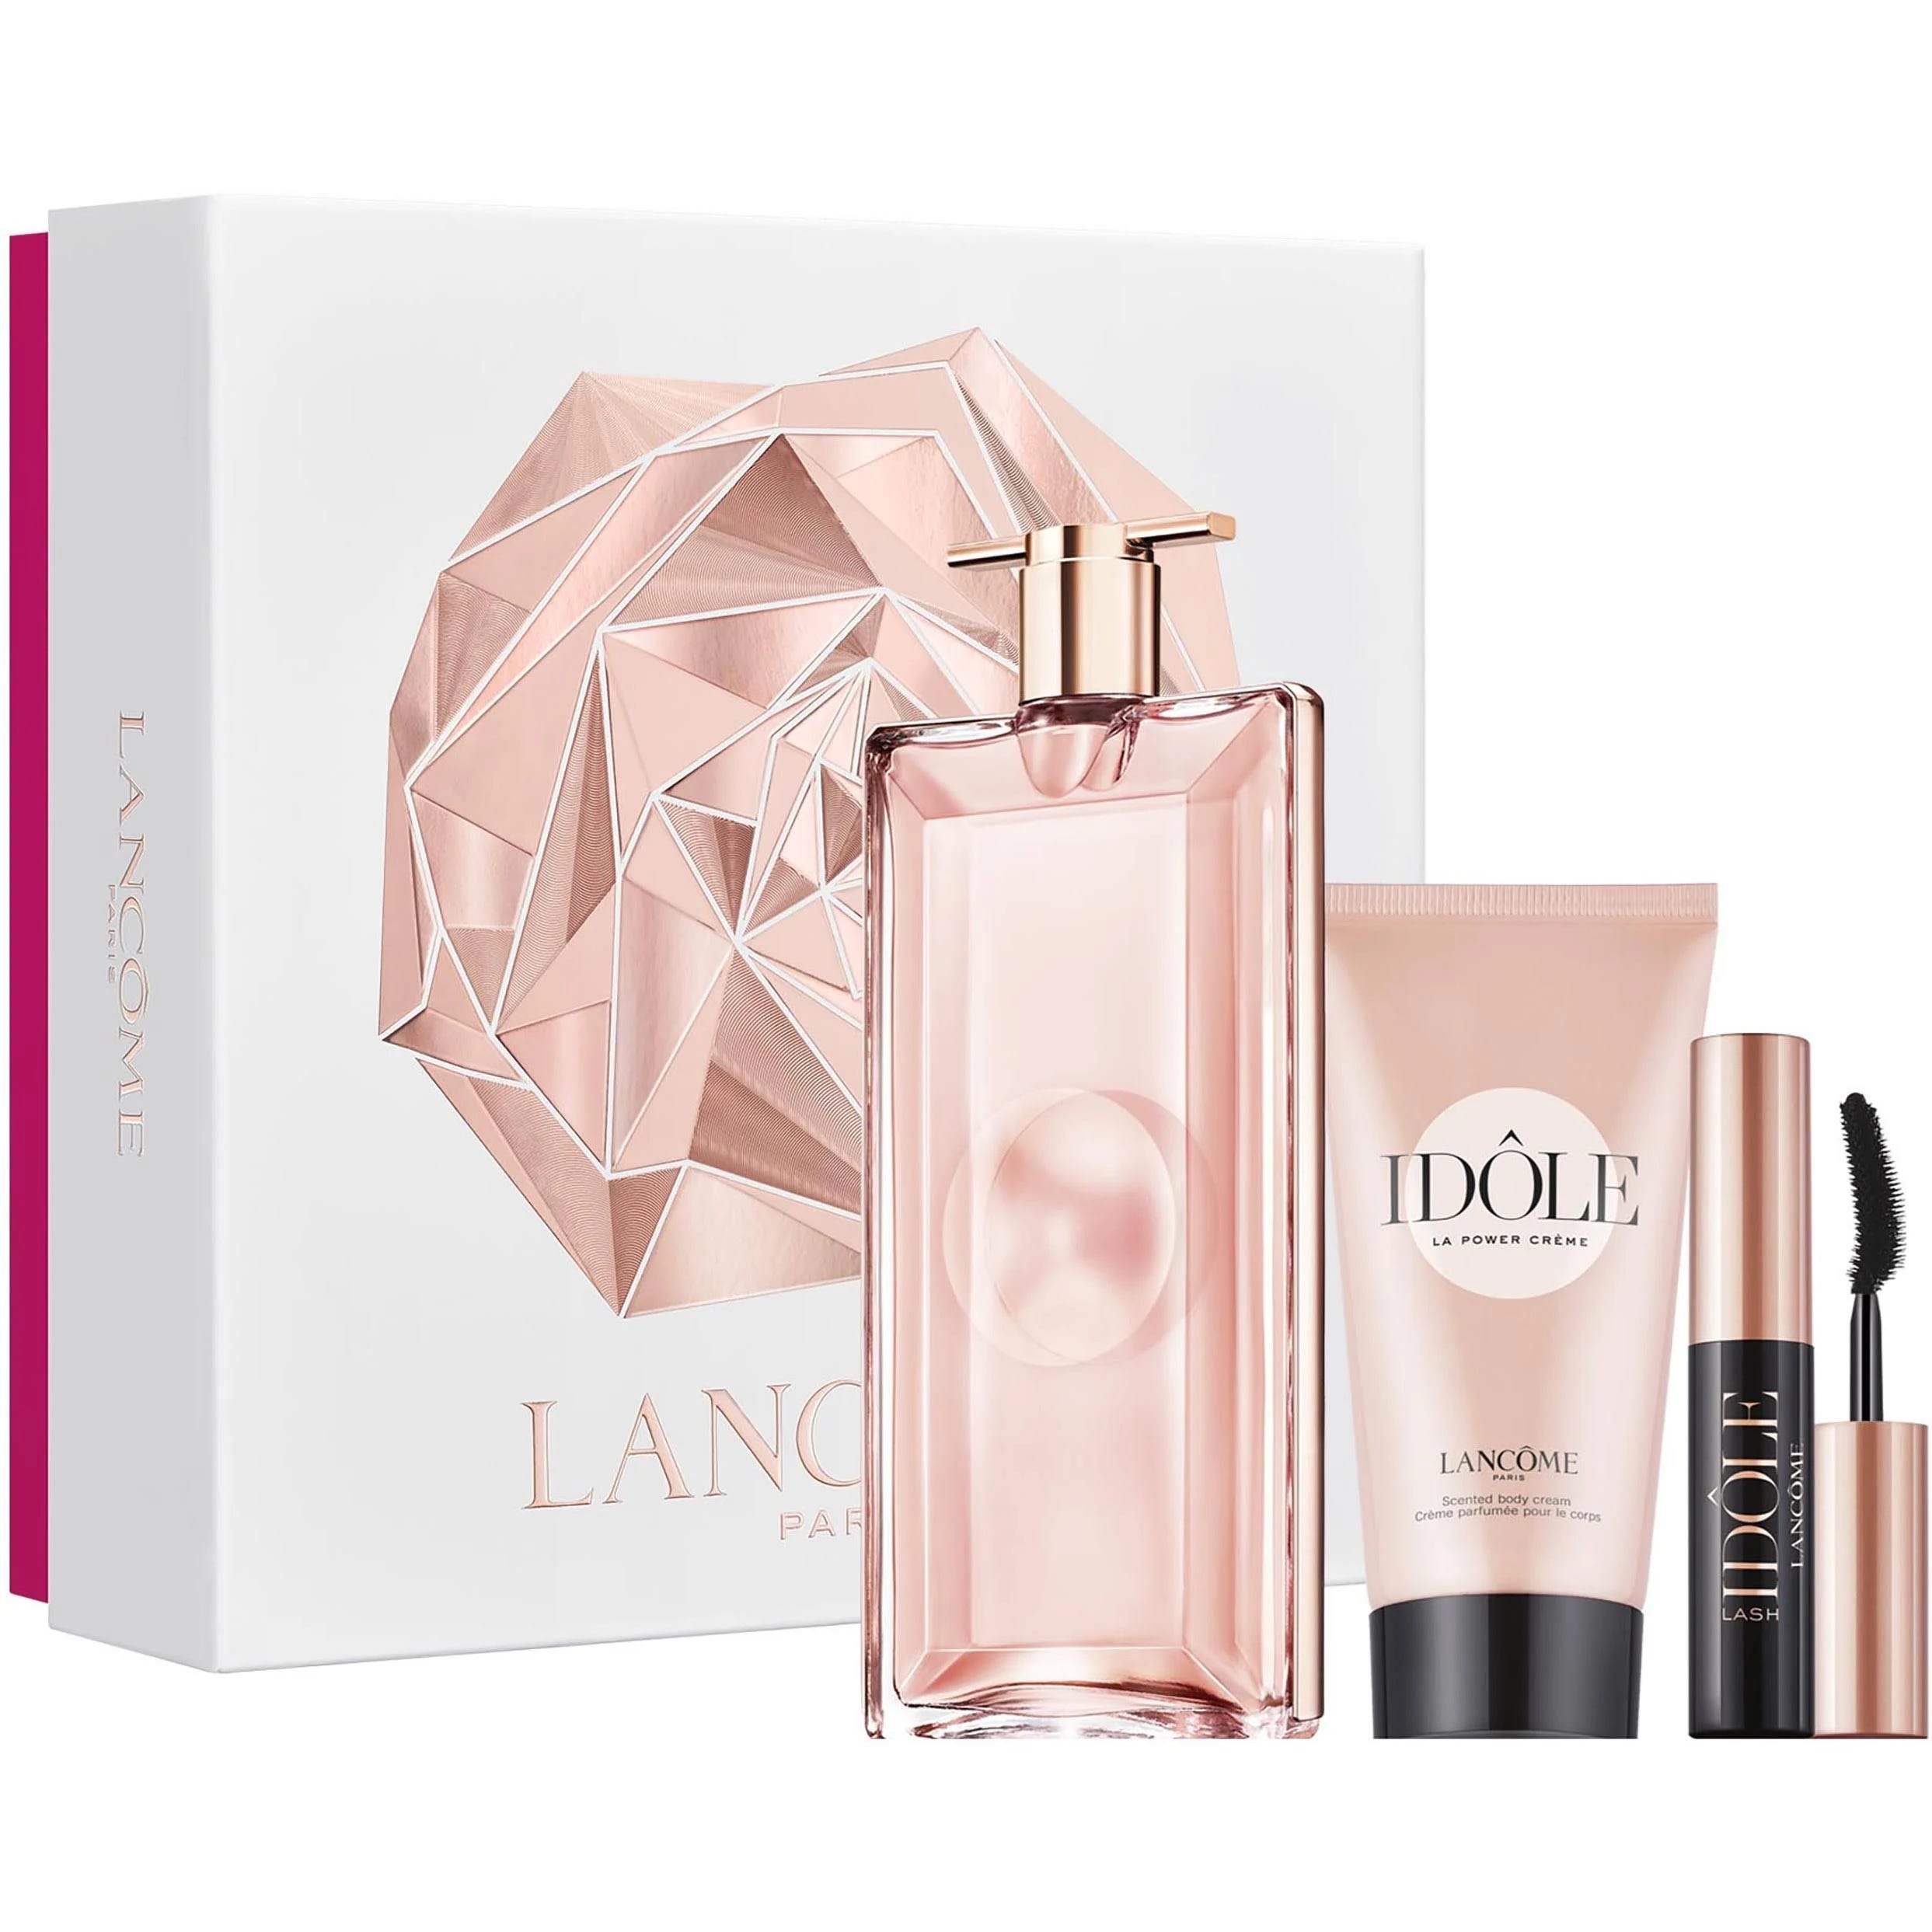 Lancome Ladies Idole Perfume Gift Set | Image